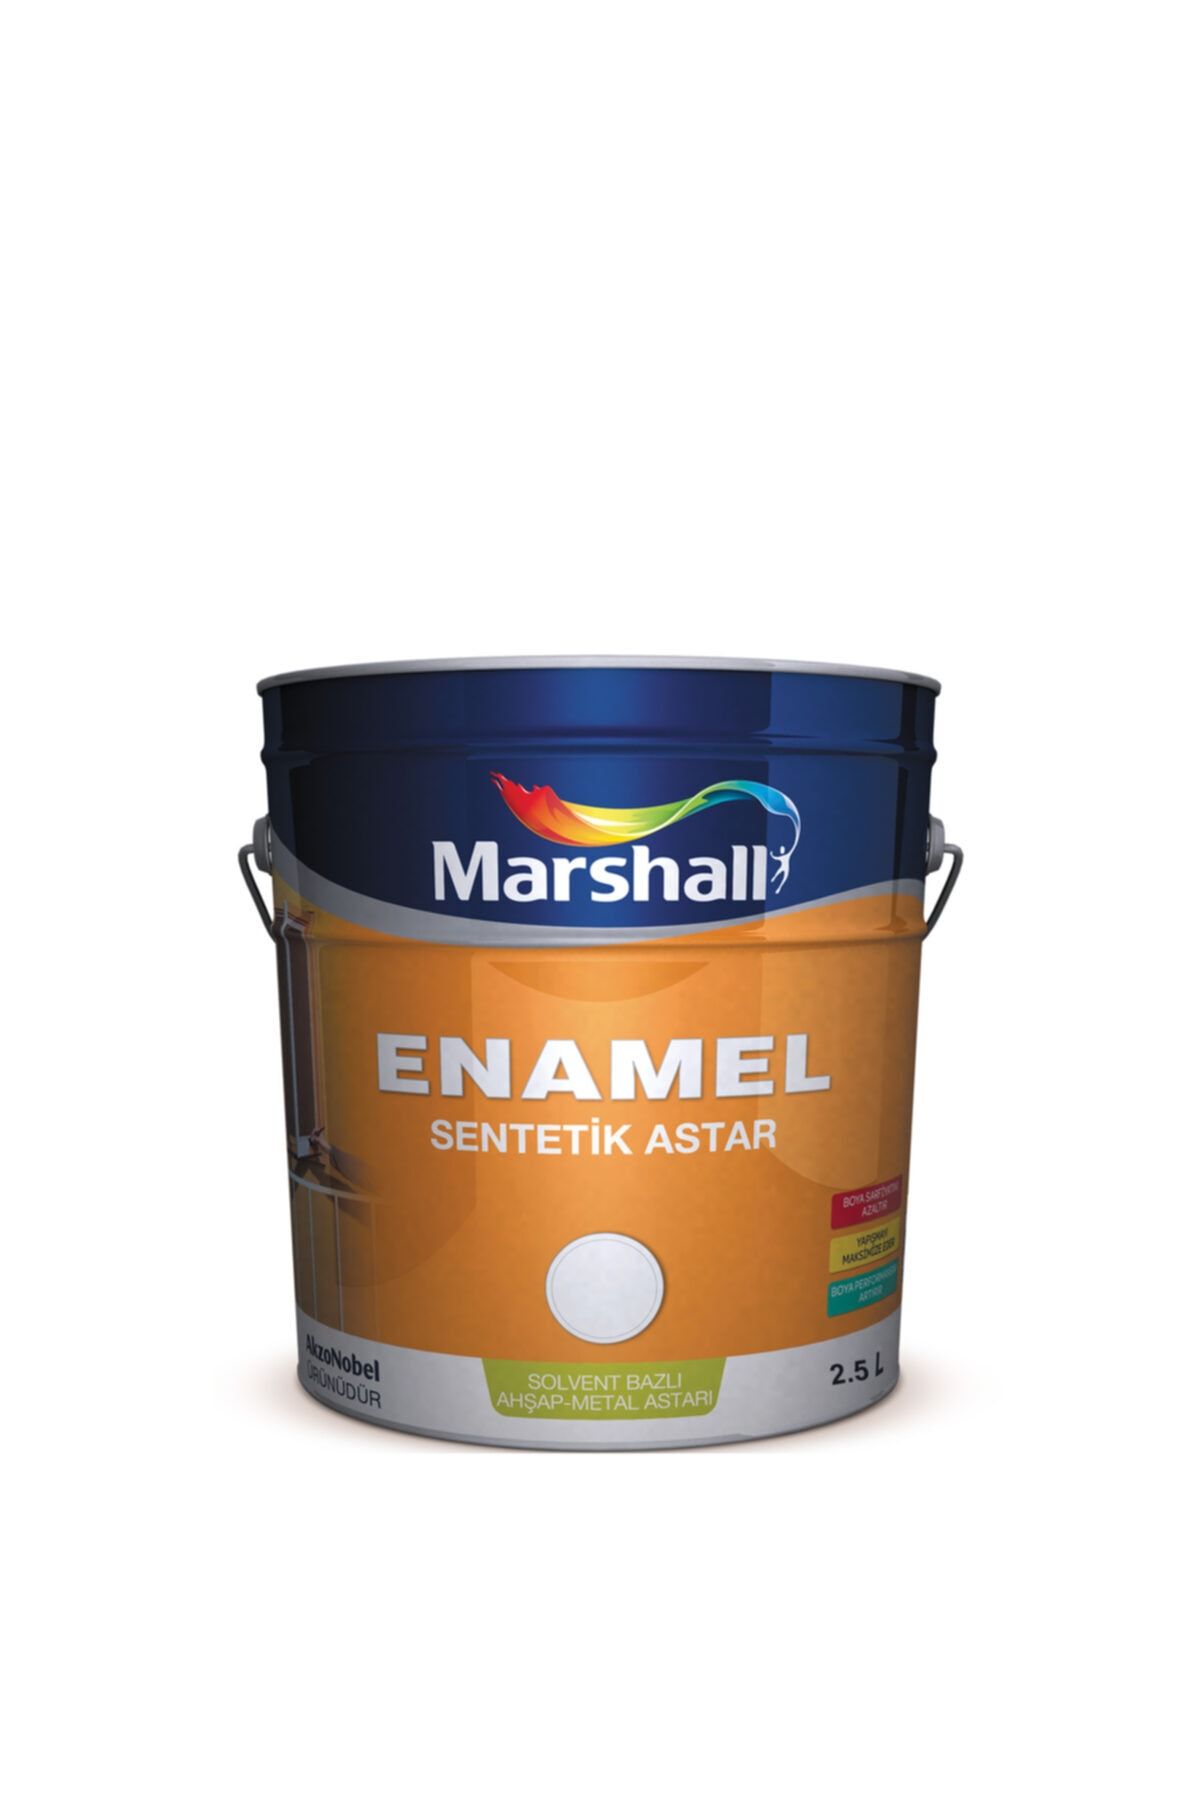 Marshall Enamel Sentetik Astar Beyaz 2.5 Lt (3,5 KG)